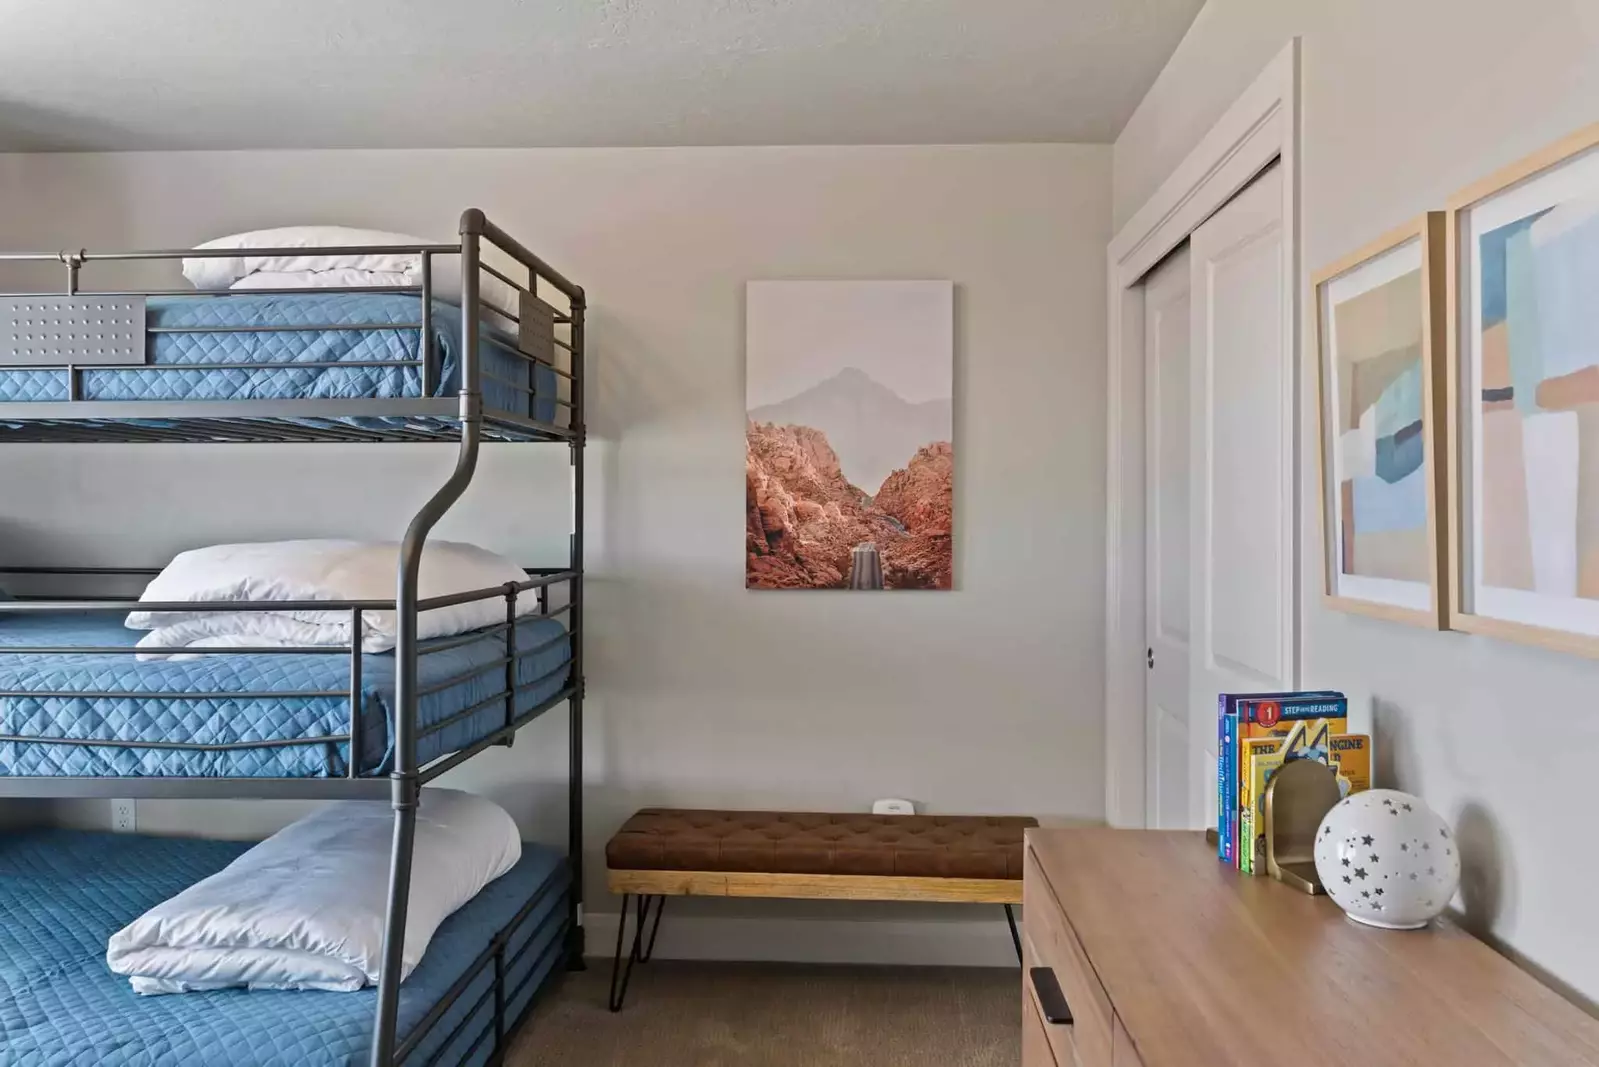 Master Bedroom 3 with 2 Twin/Full/Queen Bunk Beds